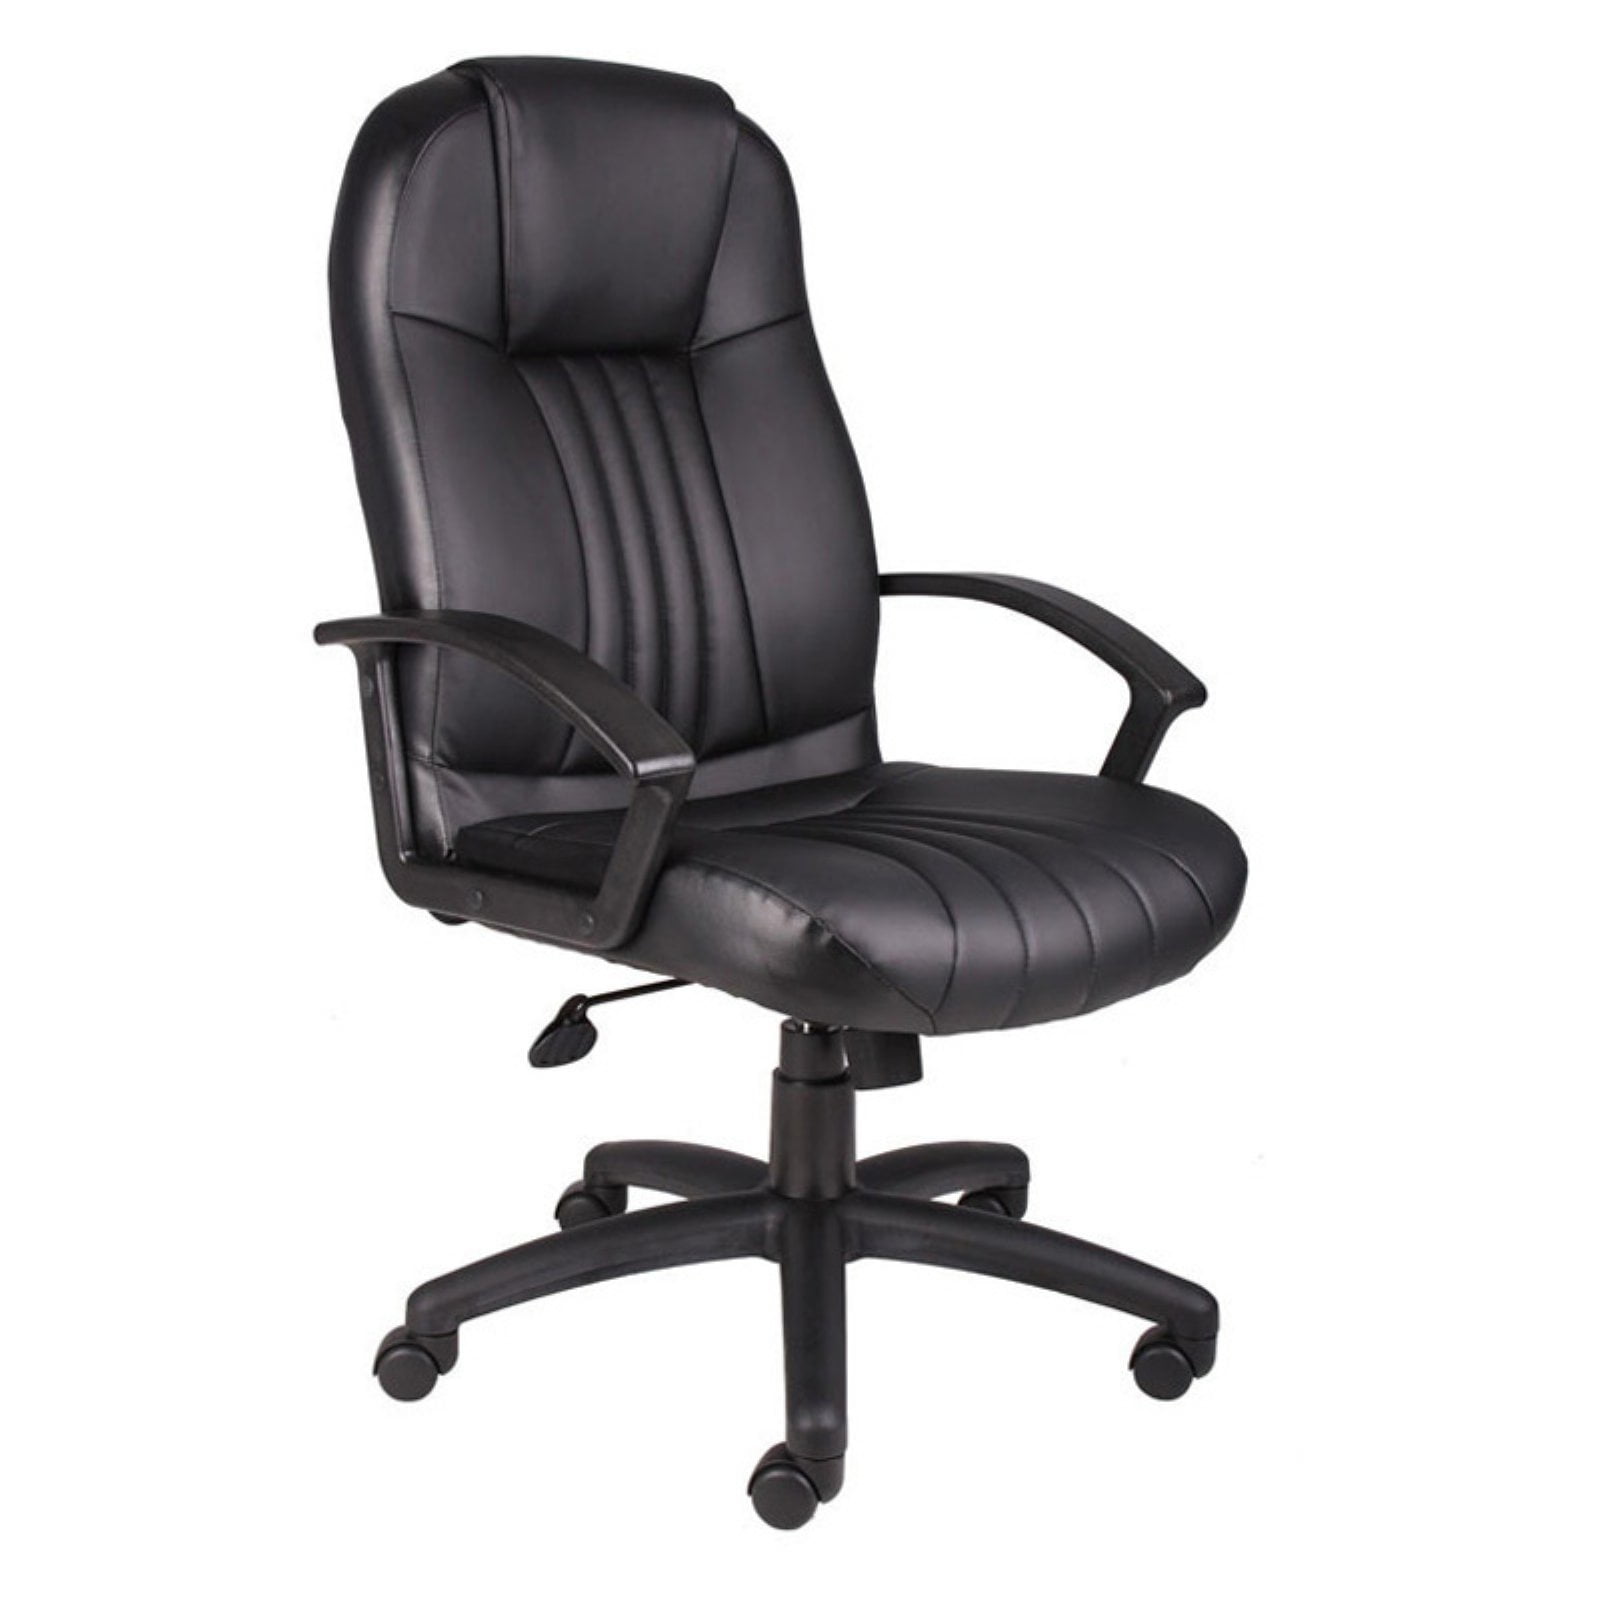 Boss High Back Leatherplus Chair in Black Finish - Walmart.com